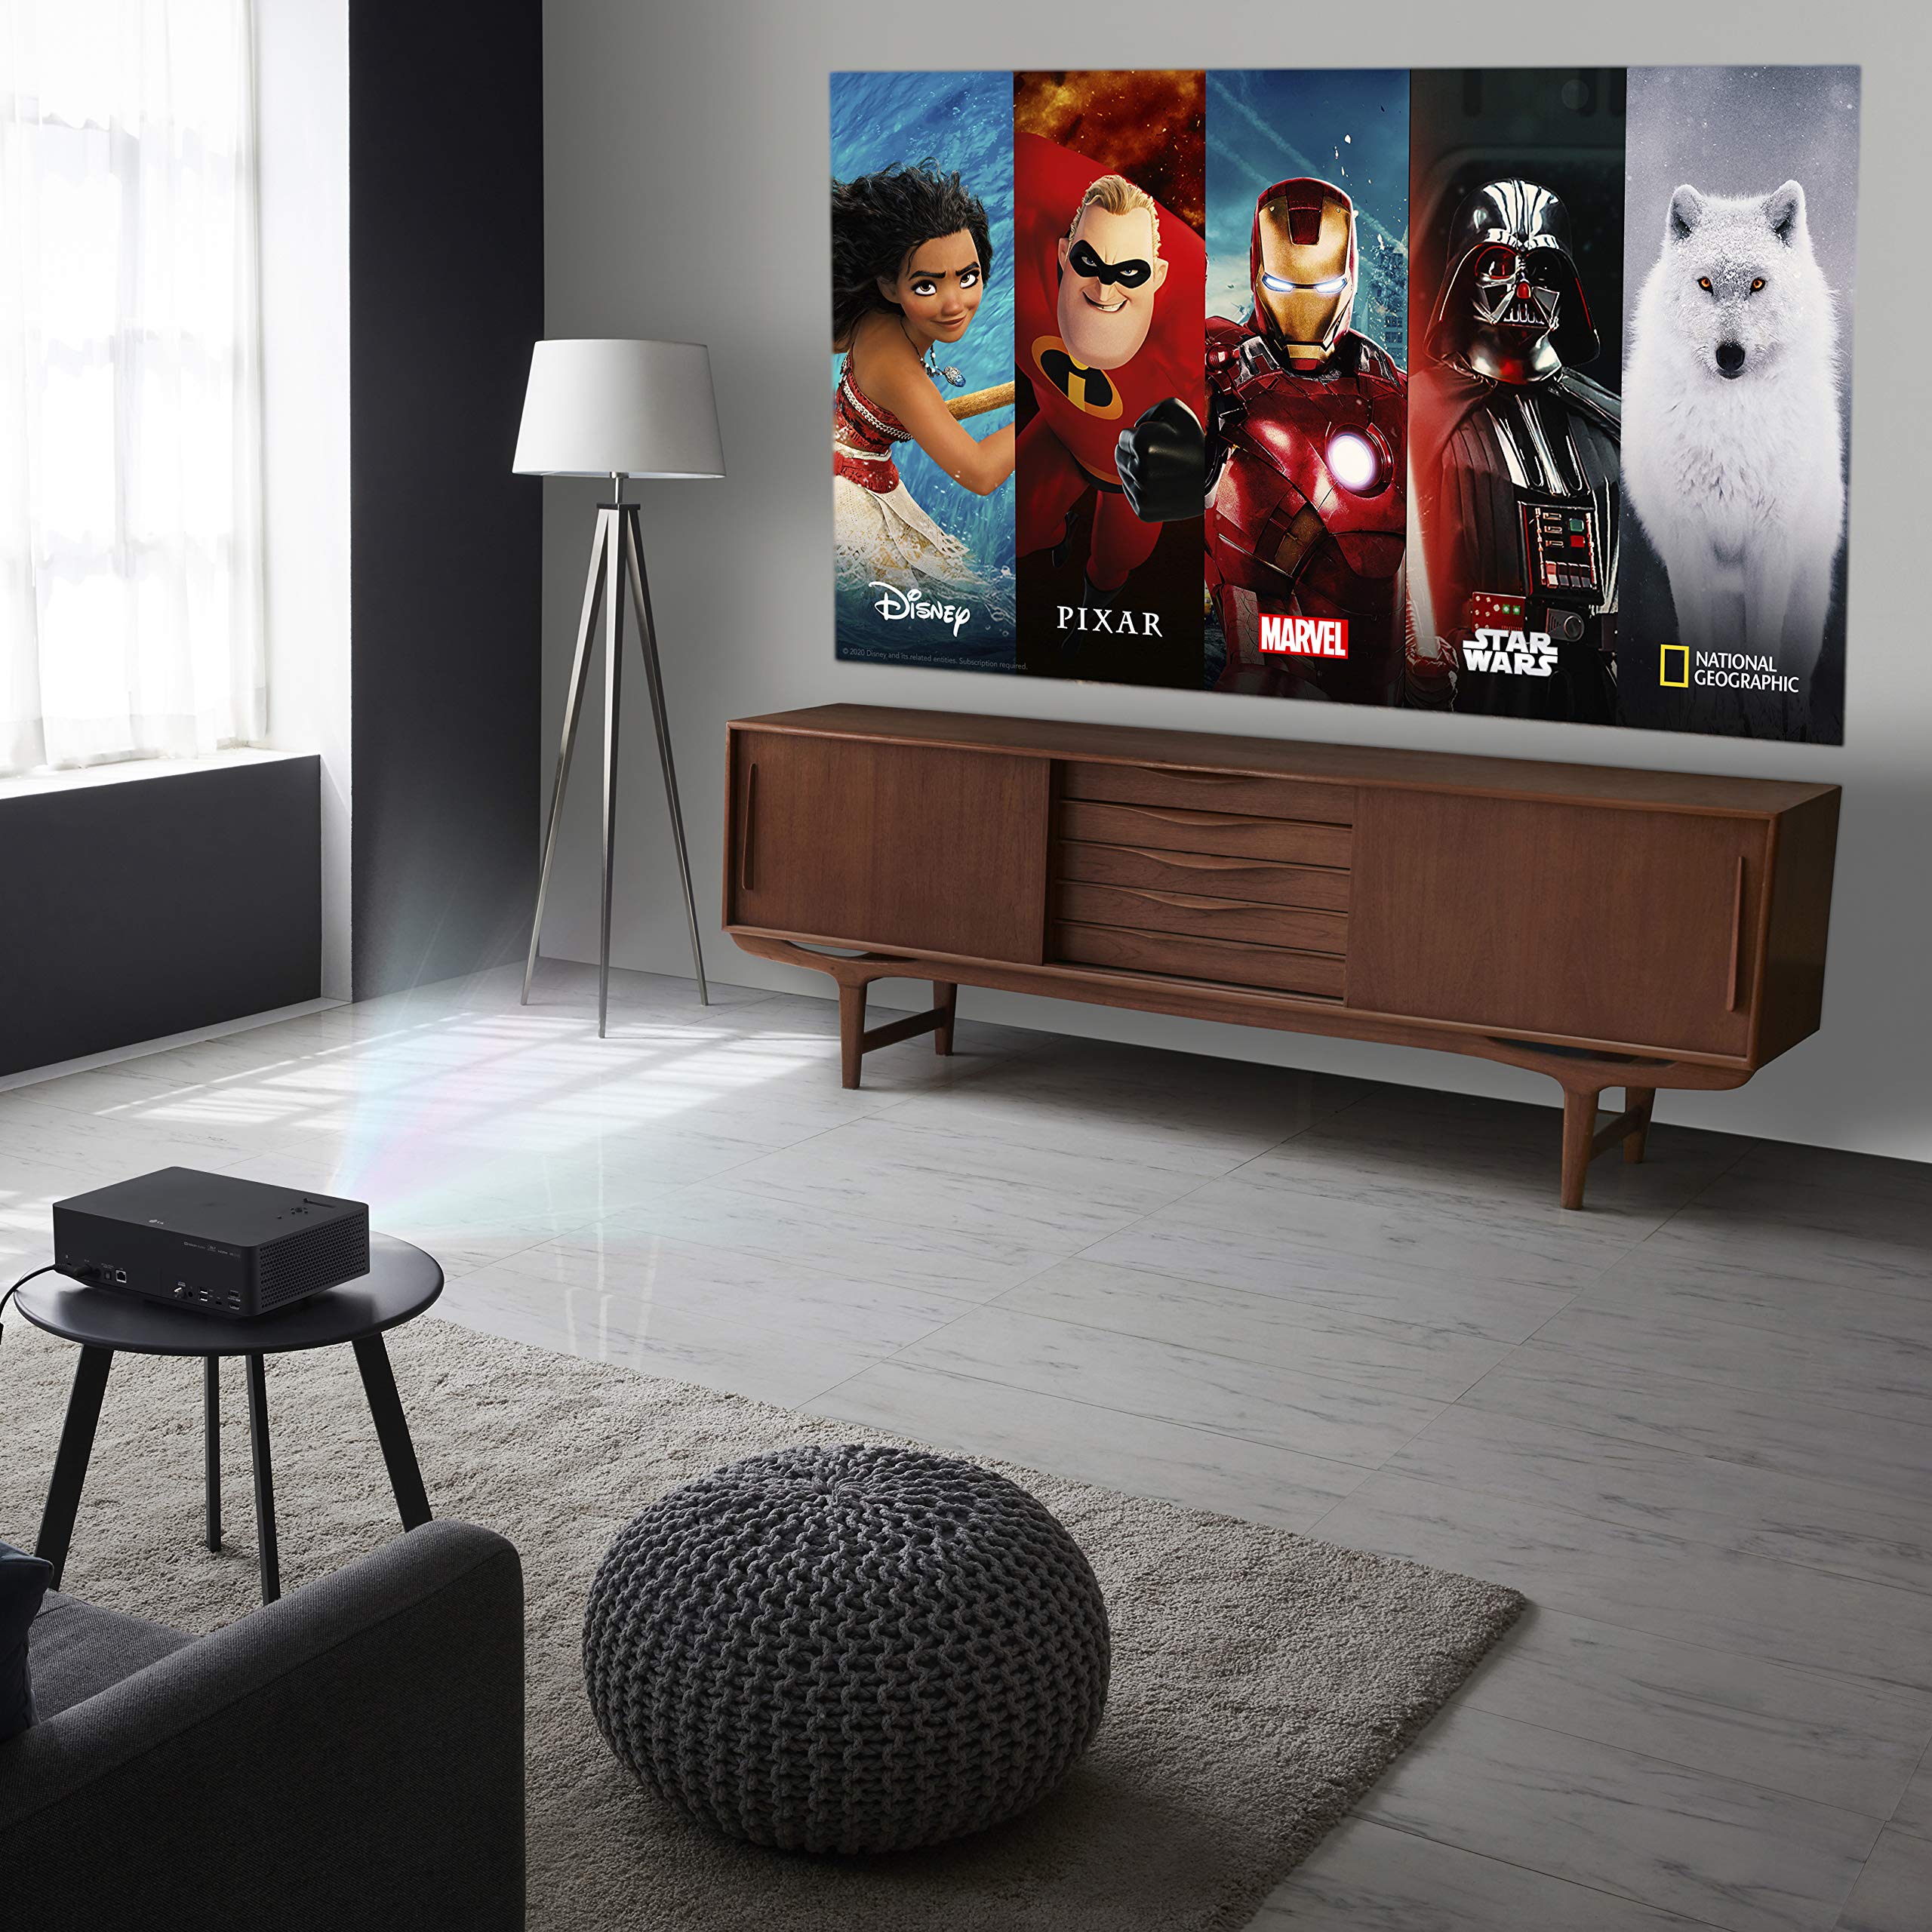 LG CineBeam UHD 4K Projector HU70LAB - DLP Home Theater Smart Projector, Black